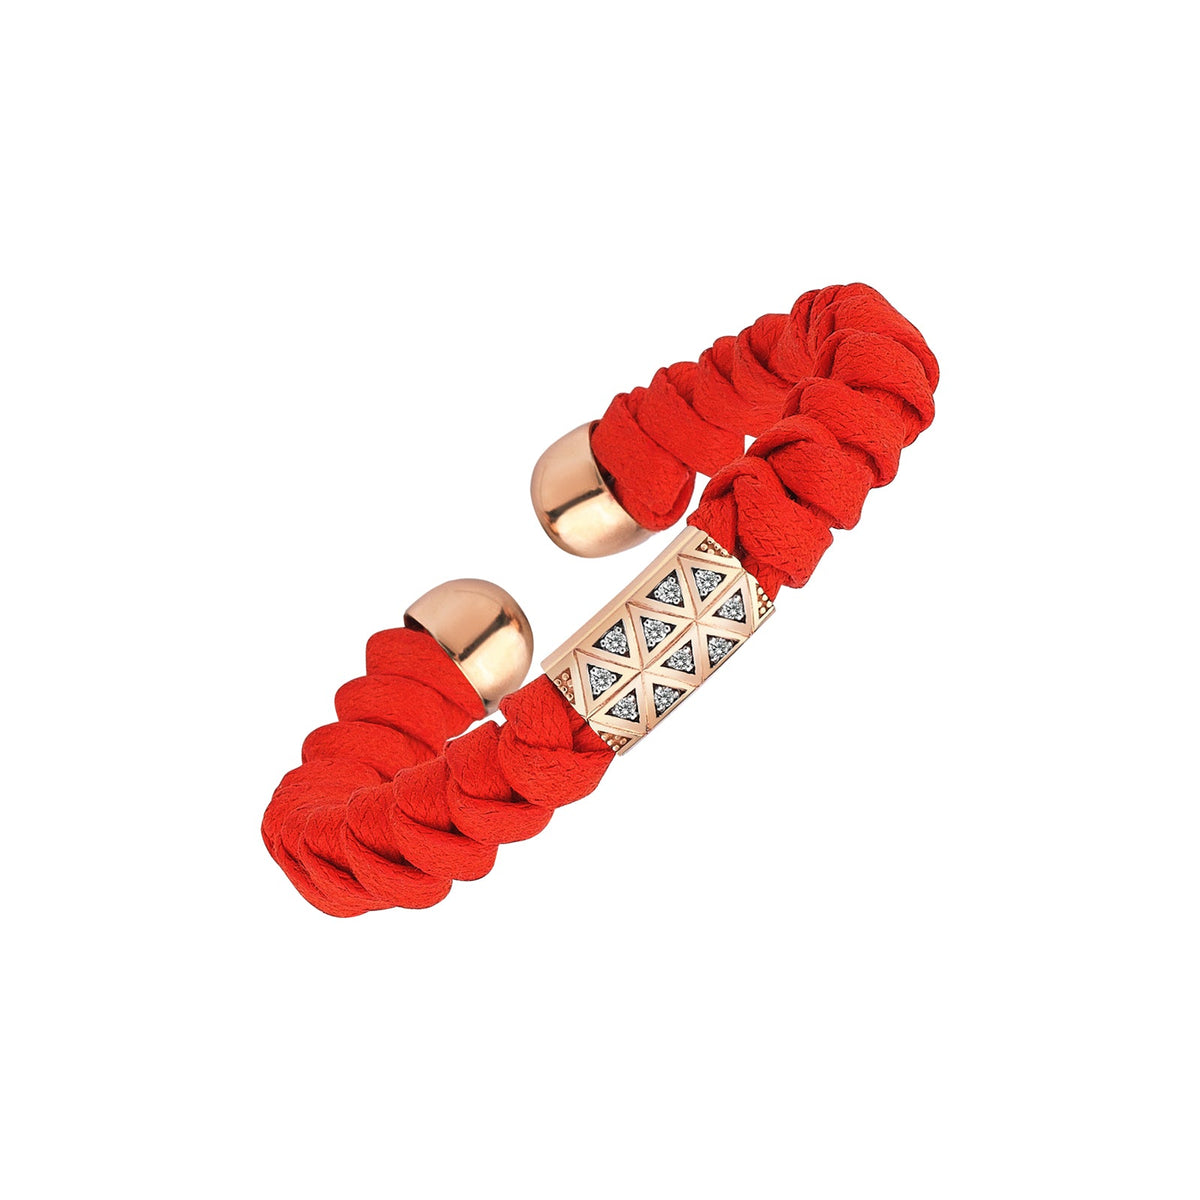 Cayman Cuff Bracelet - Kısmet by Milka Türkiye